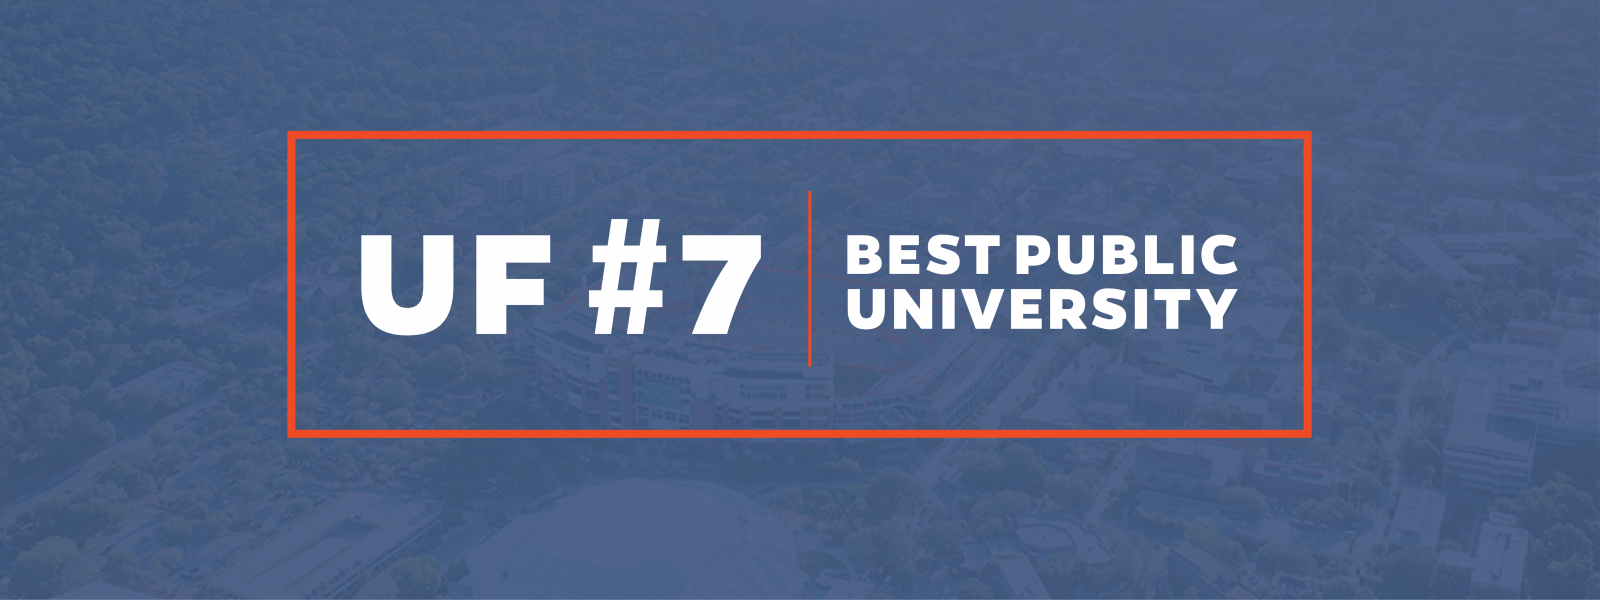 UF #7 Best Public University